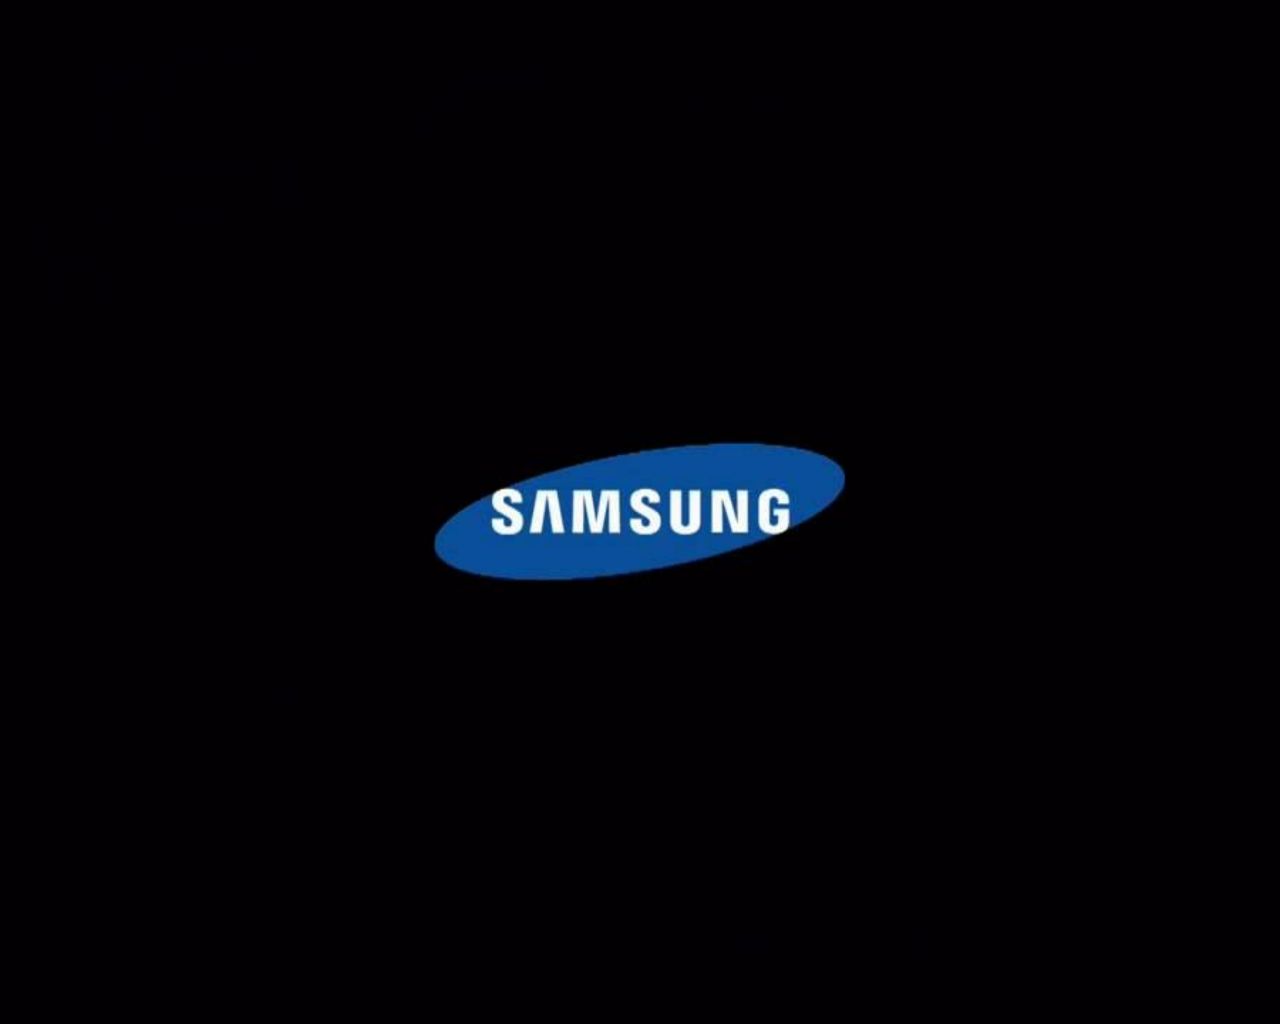 Samsung Logo Wallpapers Desktop Background